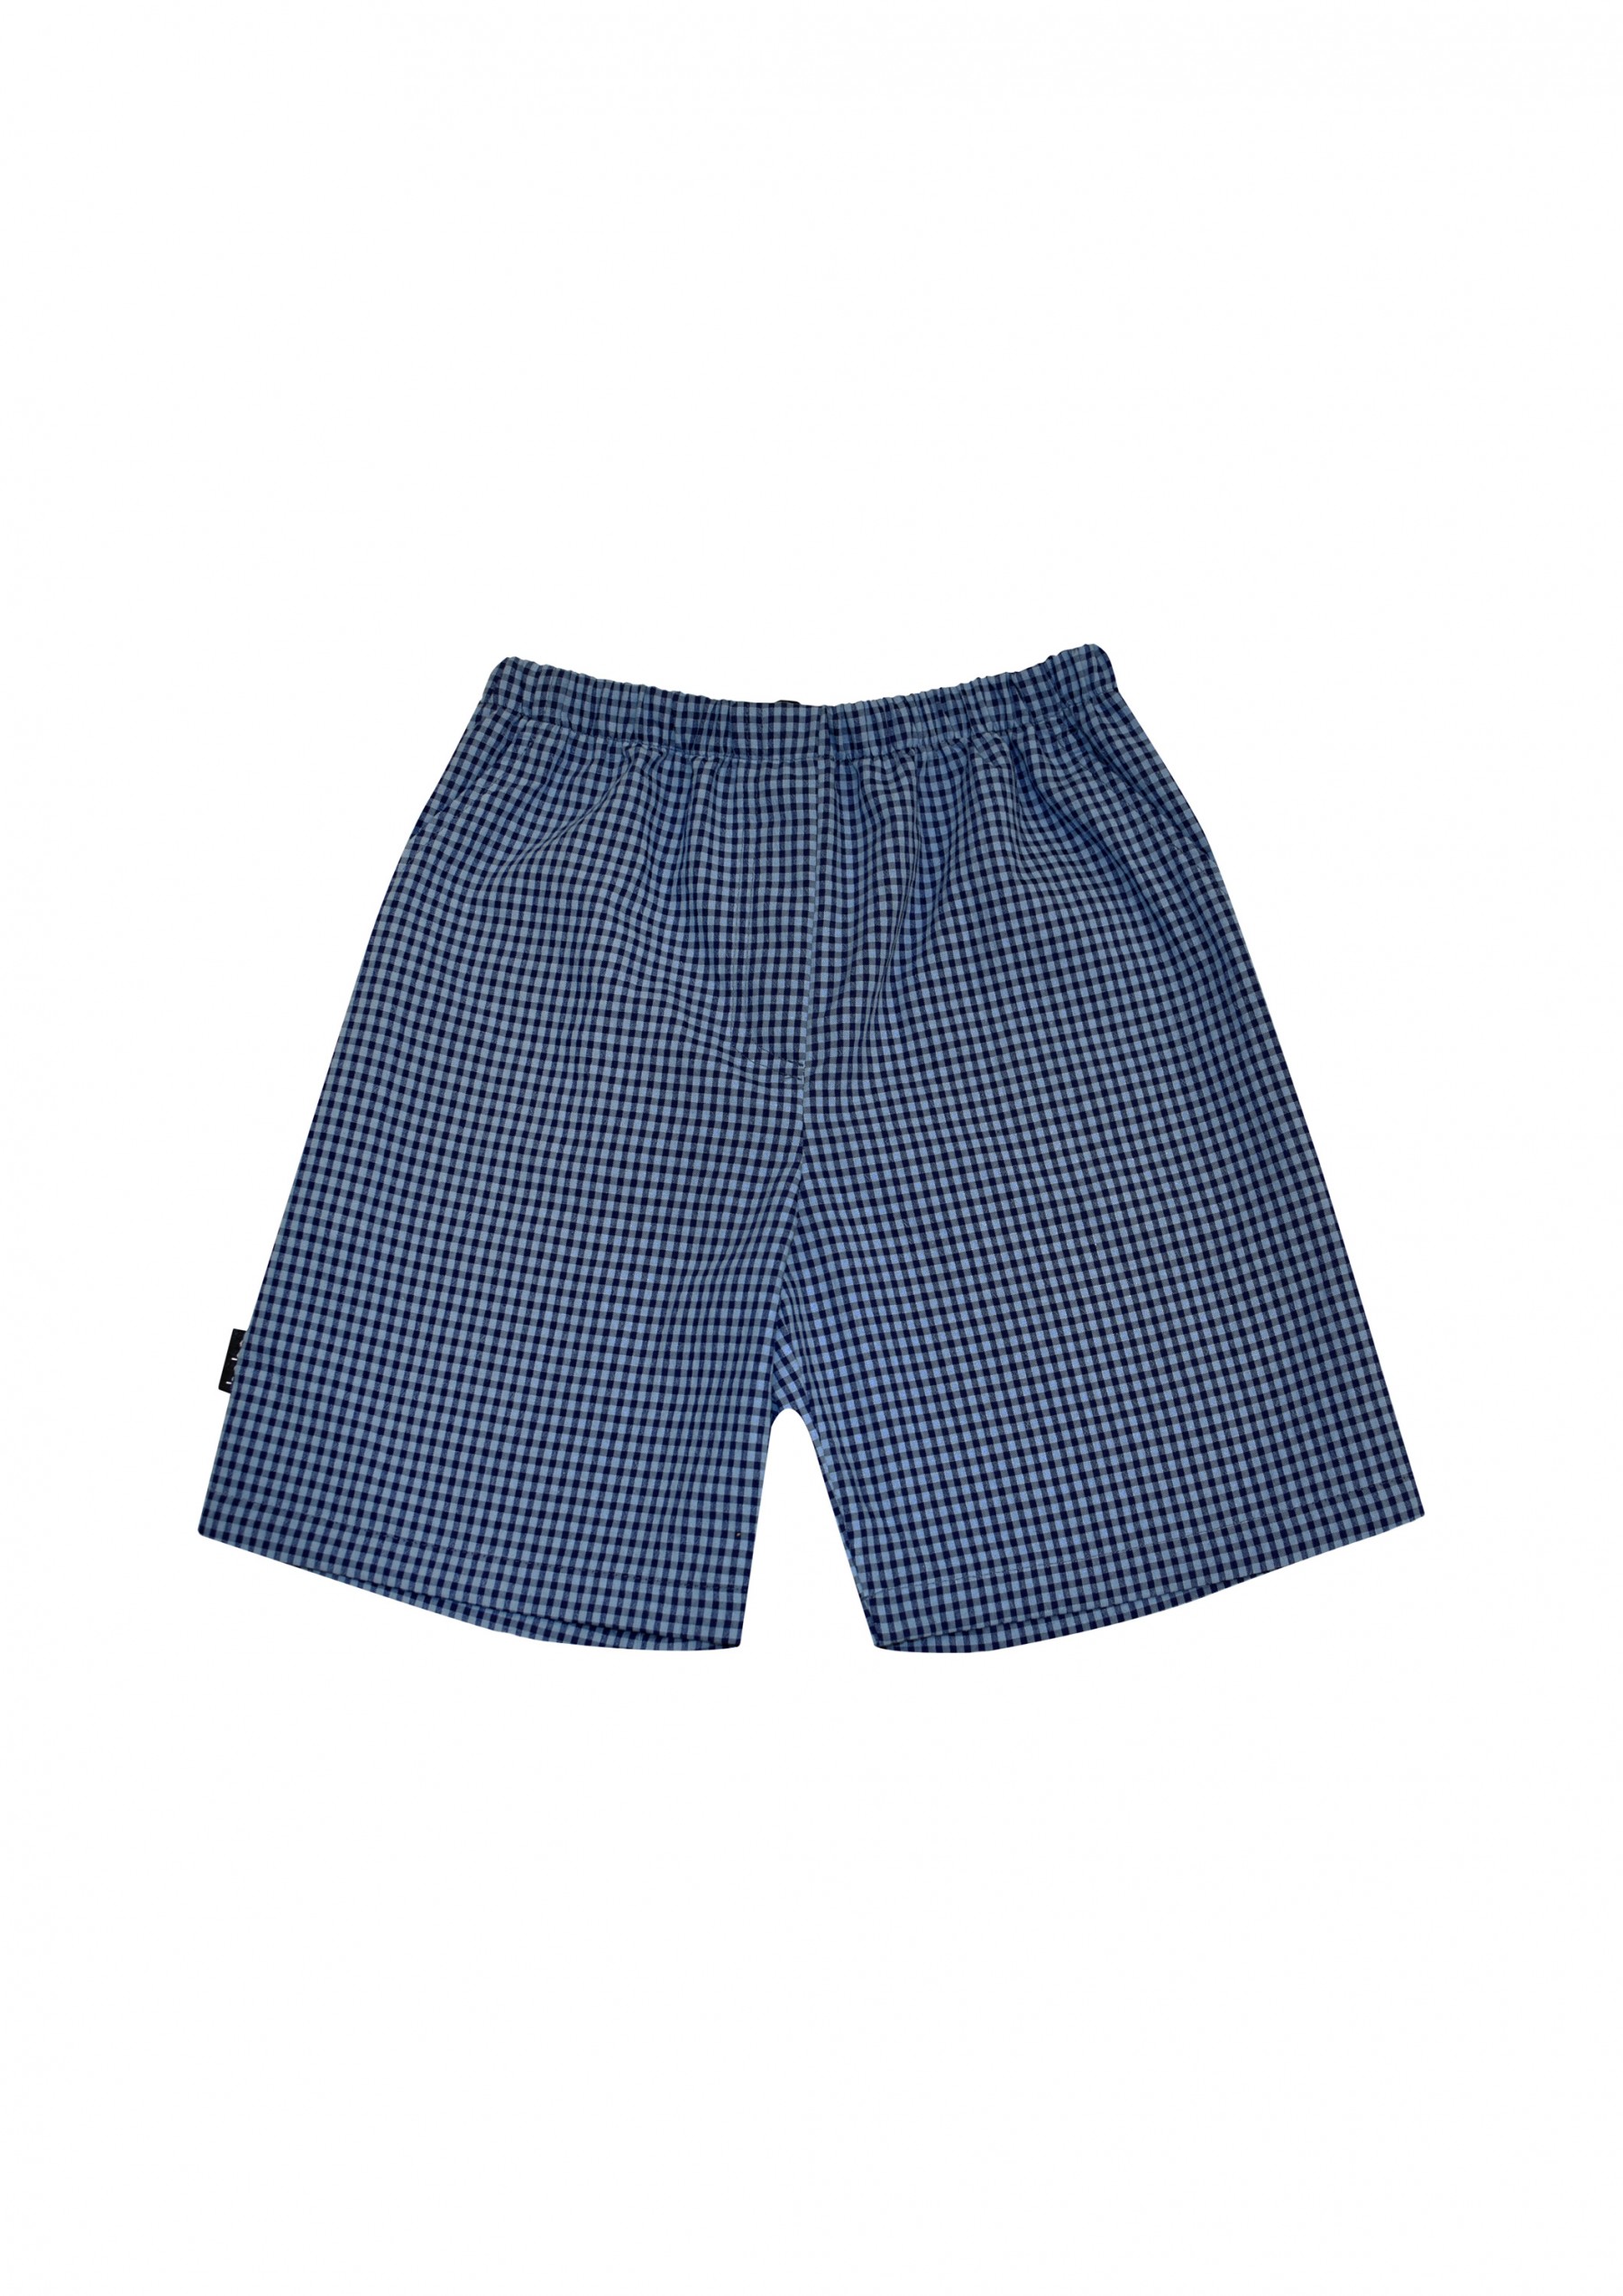 Shorts blue checkered, for boys | HEBE